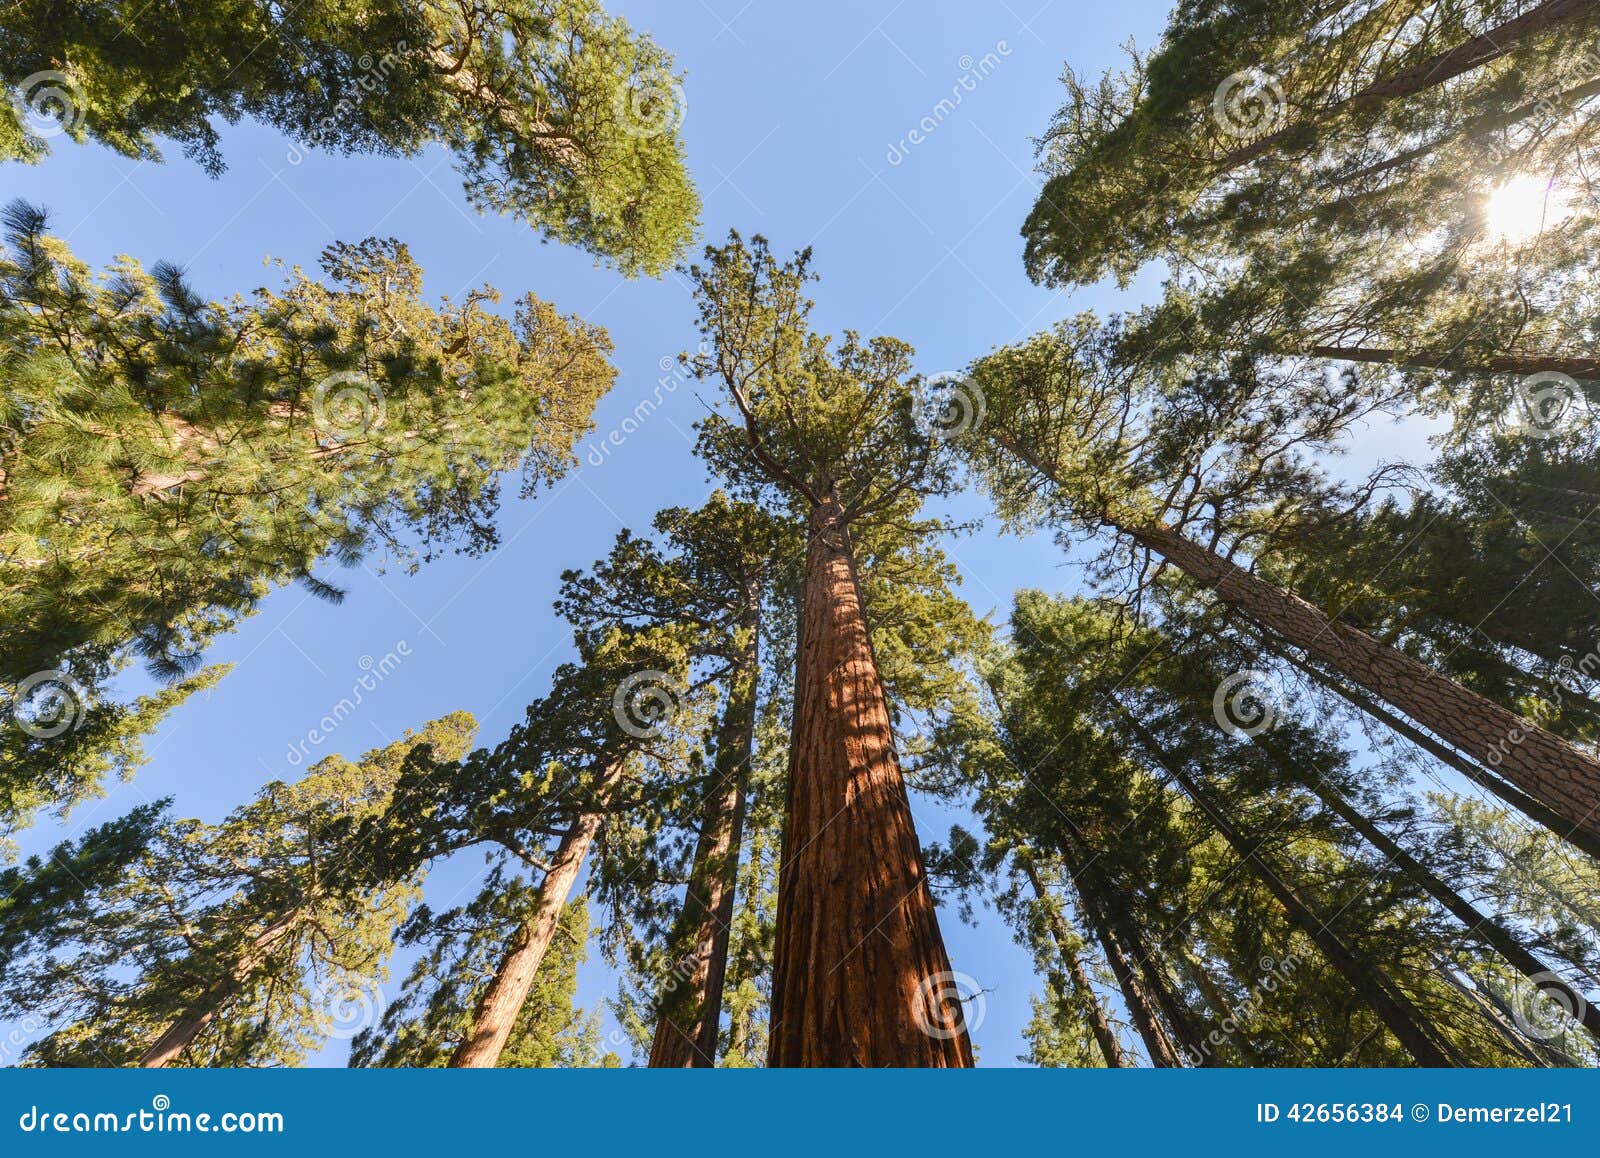 sequoias in mariposa grove, yosemite national park